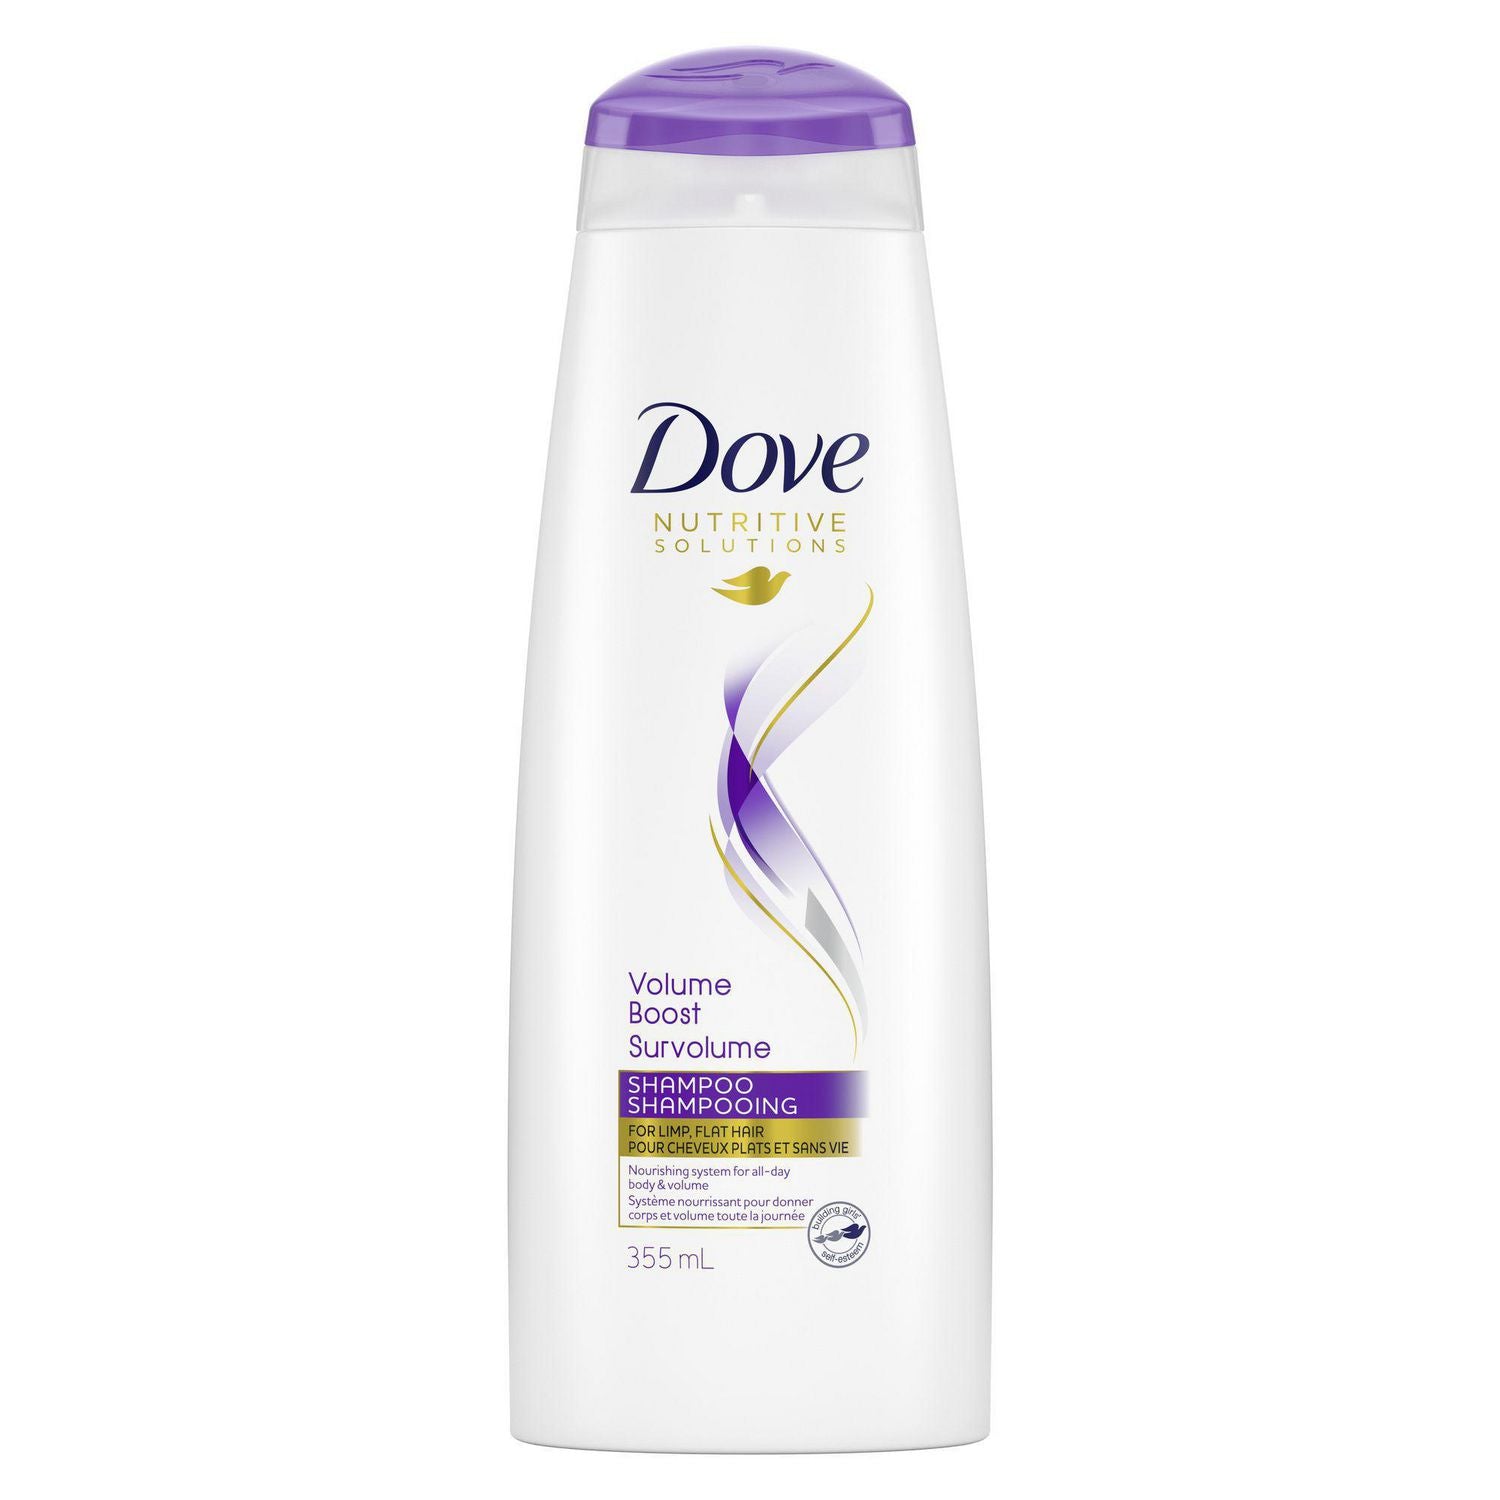 Dove Nutritive Solutions Volume Boost Shampoo 355mL